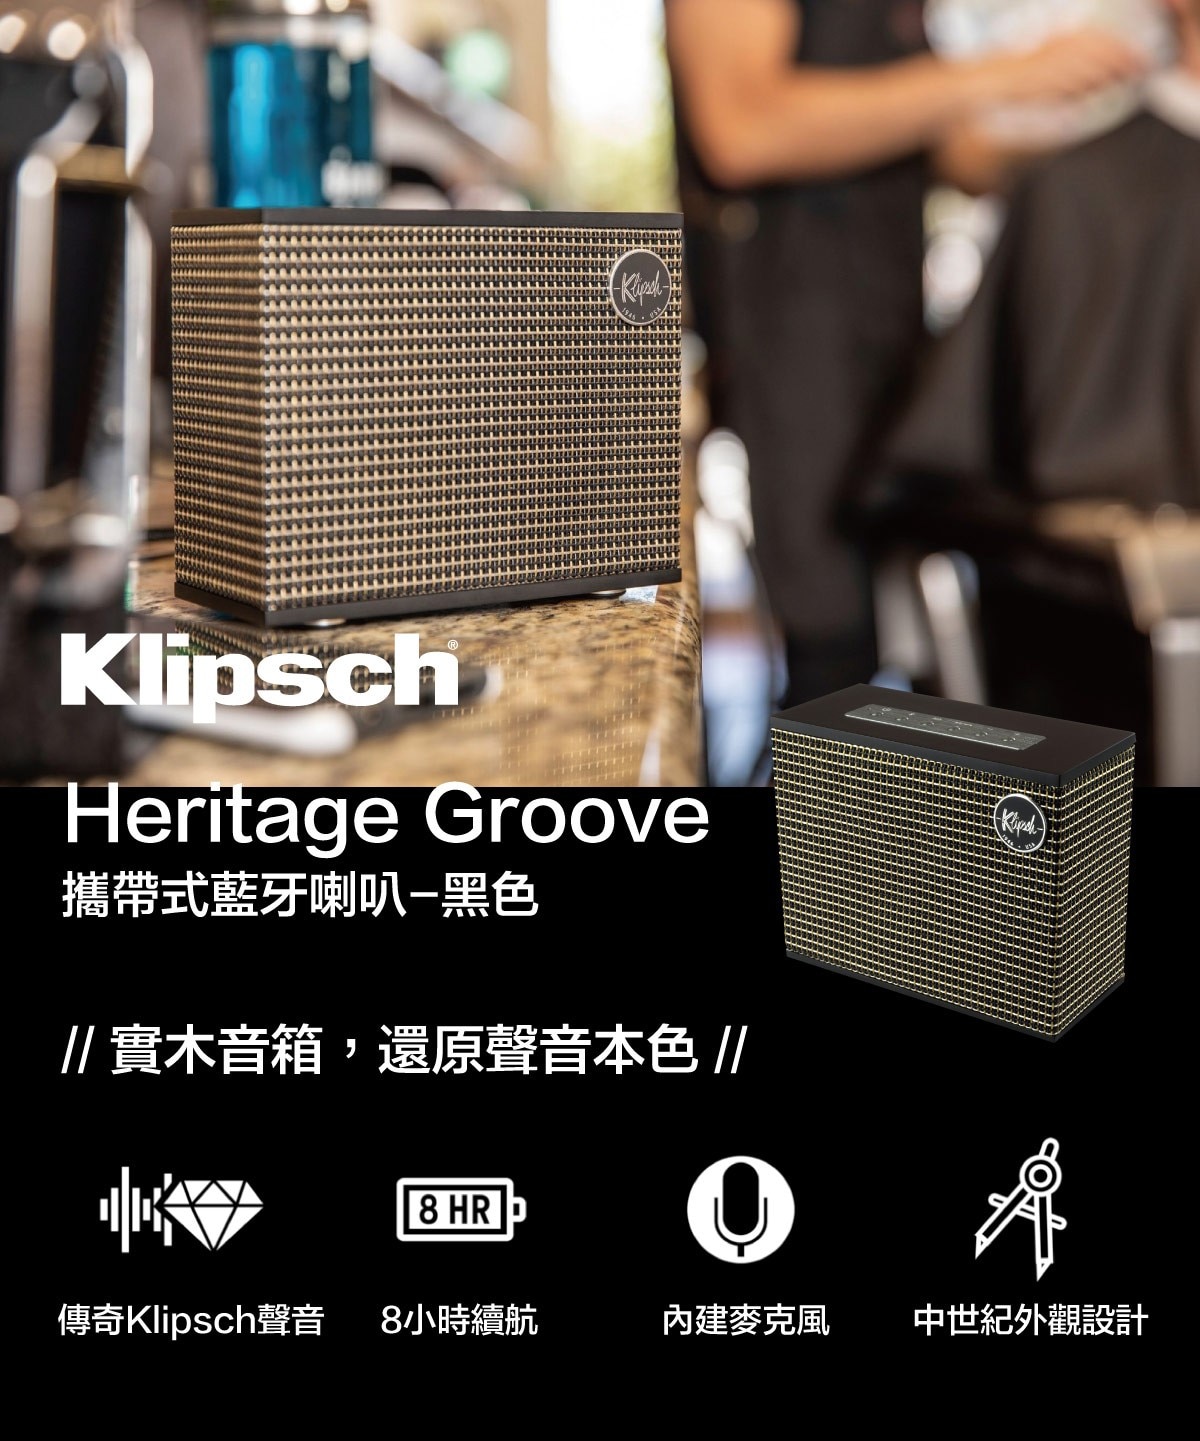 KLIPSCH 攜帶型藍芽喇叭，實木音箱，還原聲音本色，傳奇Klipsch聲音，8小時續航，內建麥克風，中世紀外觀設計。